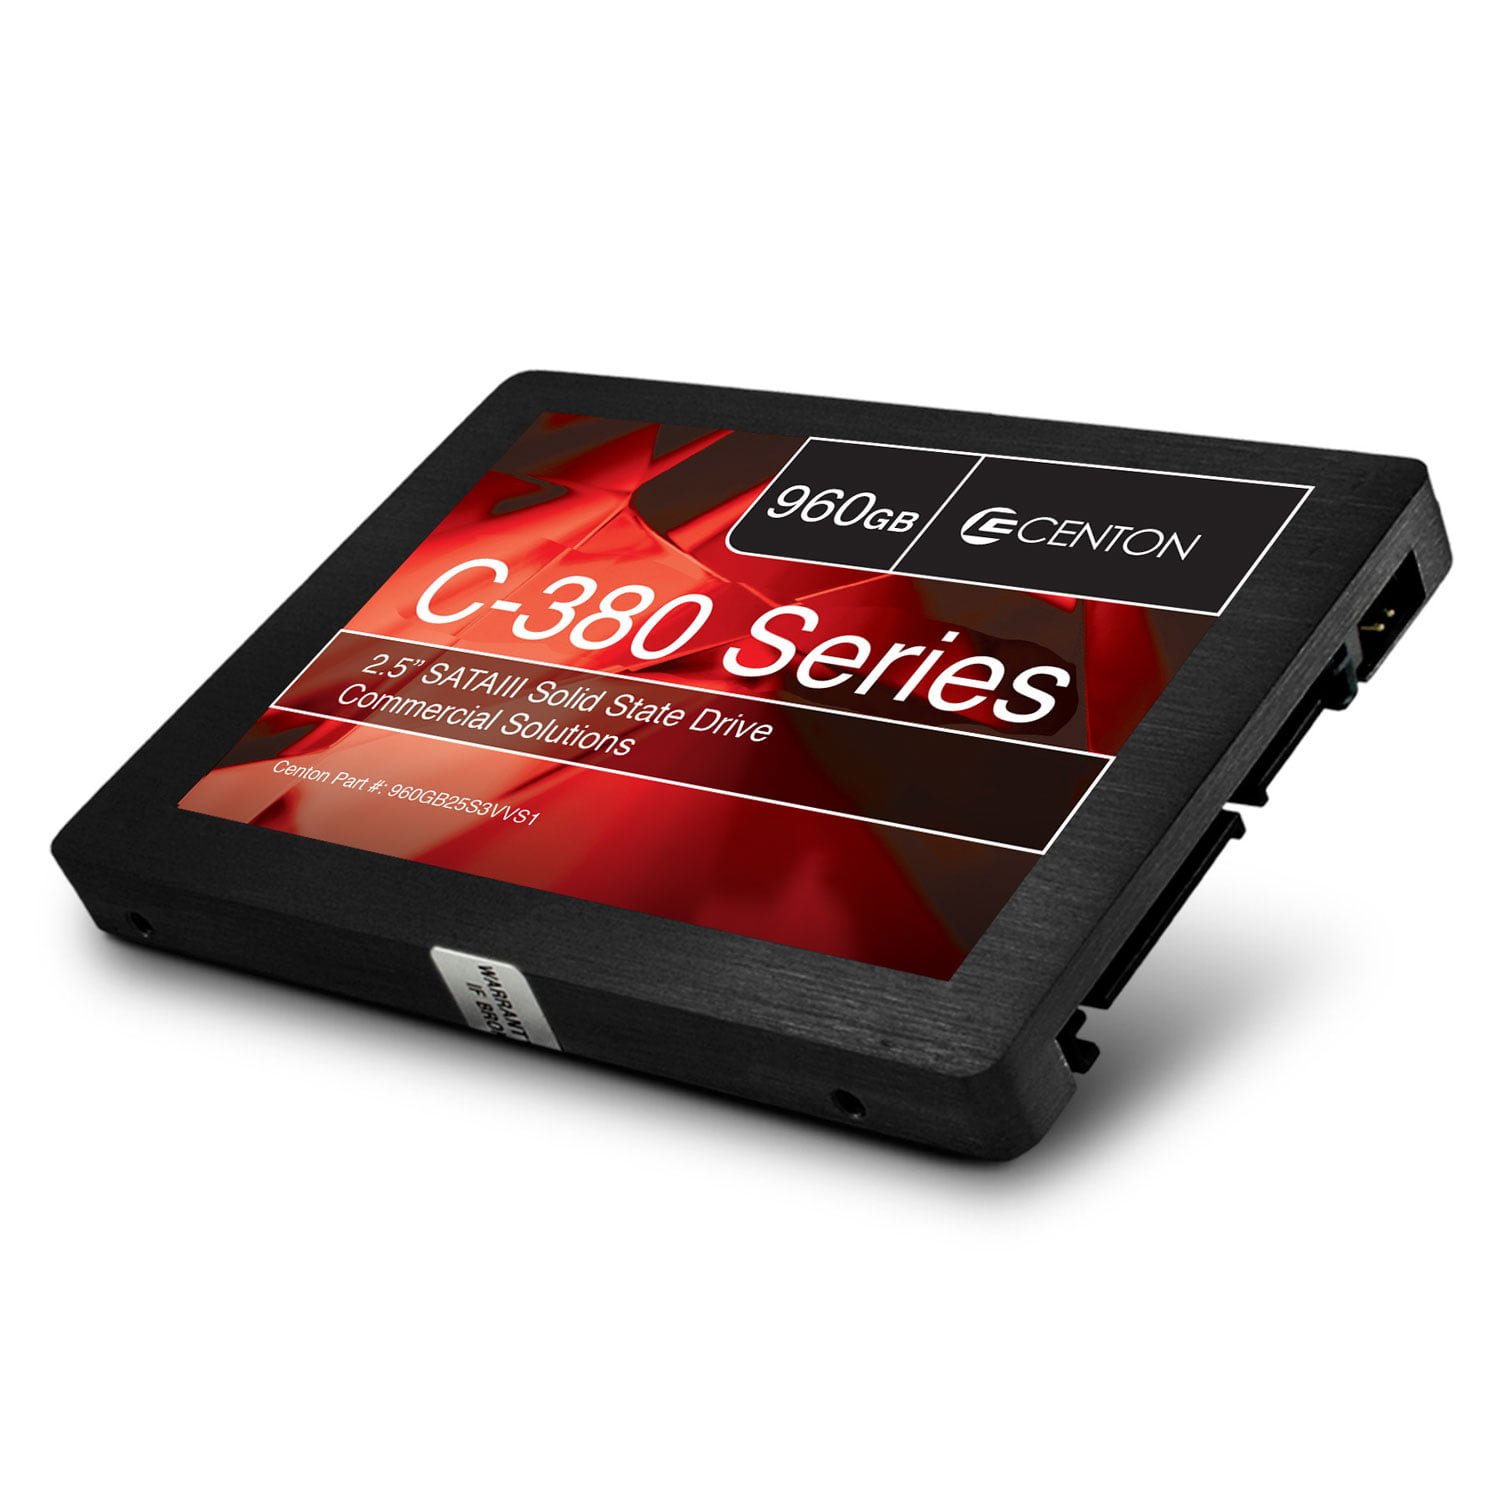 Centon MP SSD 960GB SATA III 2.5 Solid State Drive